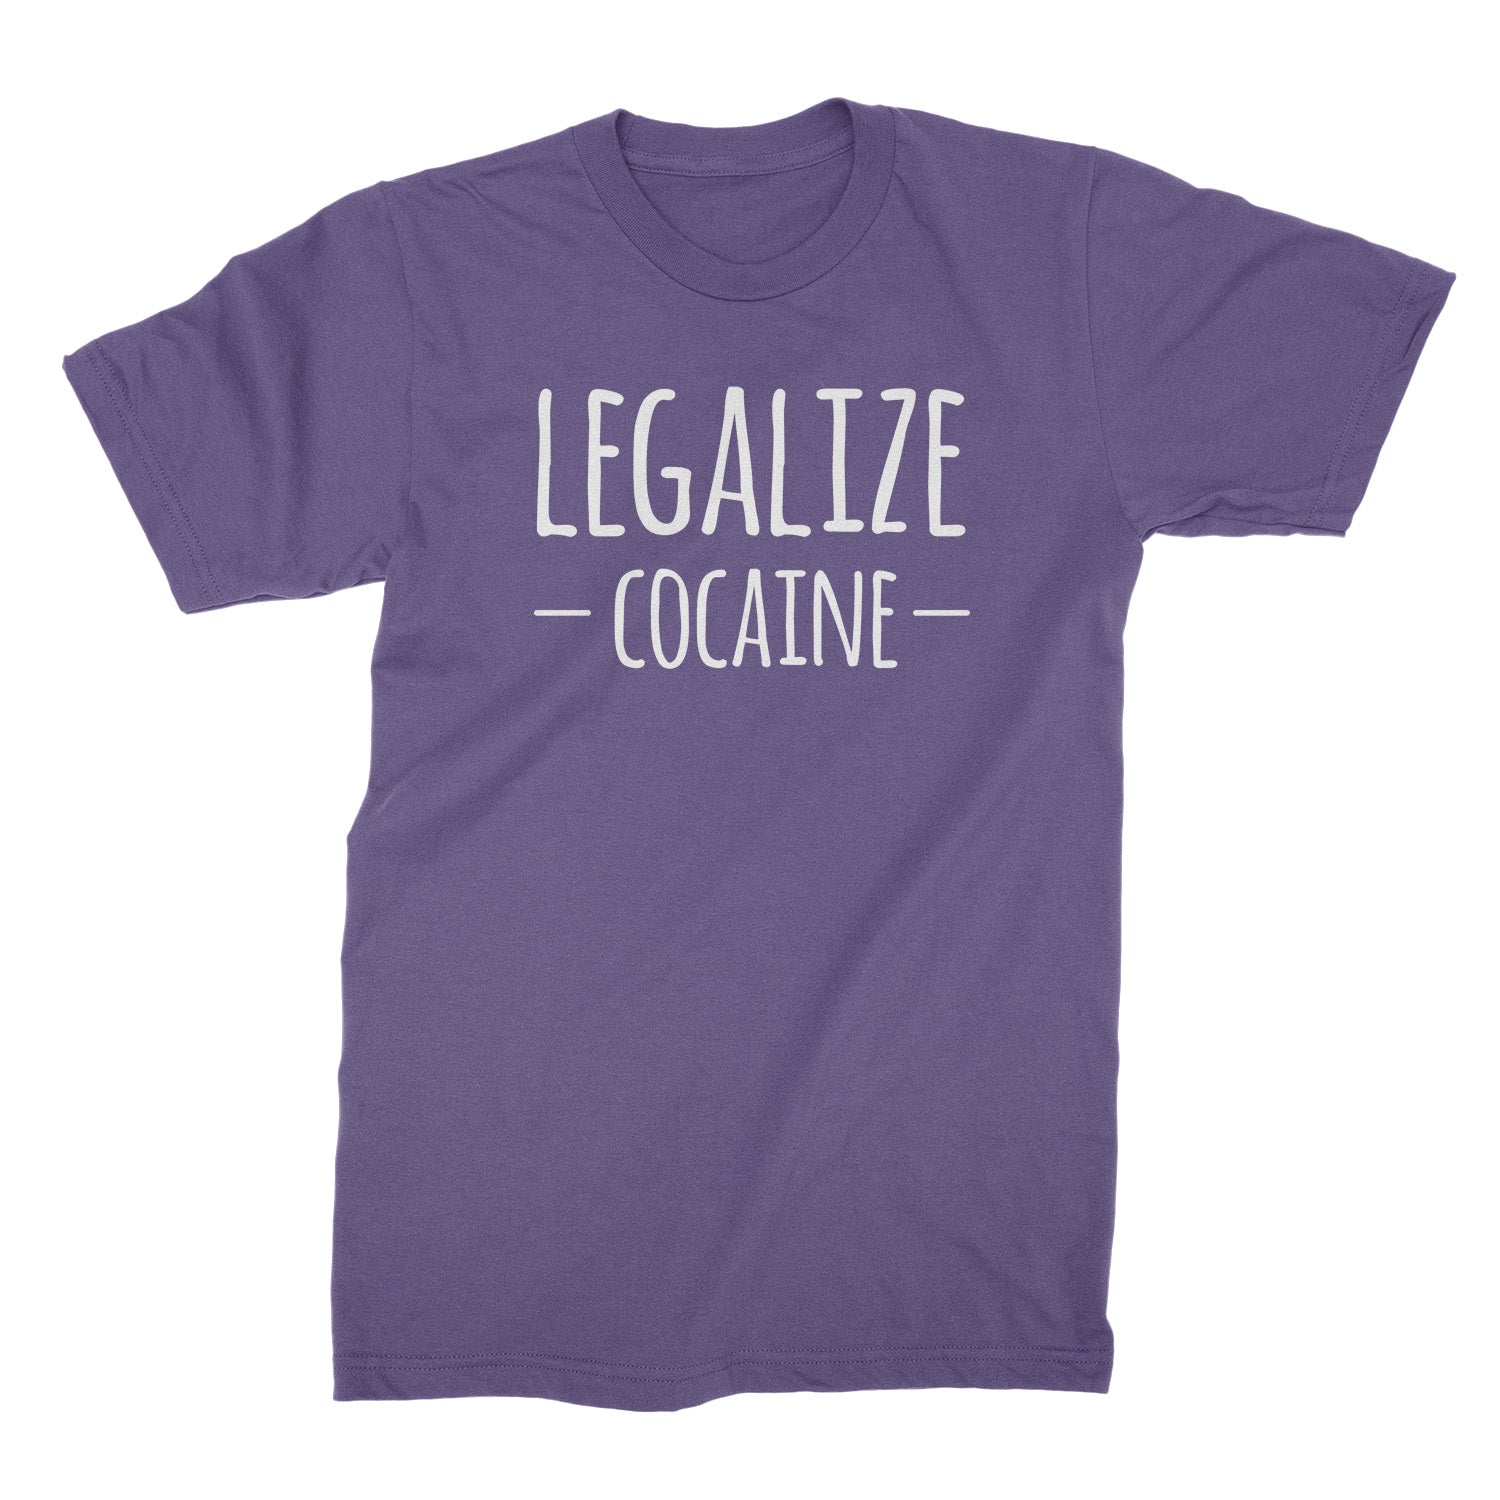 Legalize Cocain Shirt Cocaine Anti War on Drugs Shirt | eBay